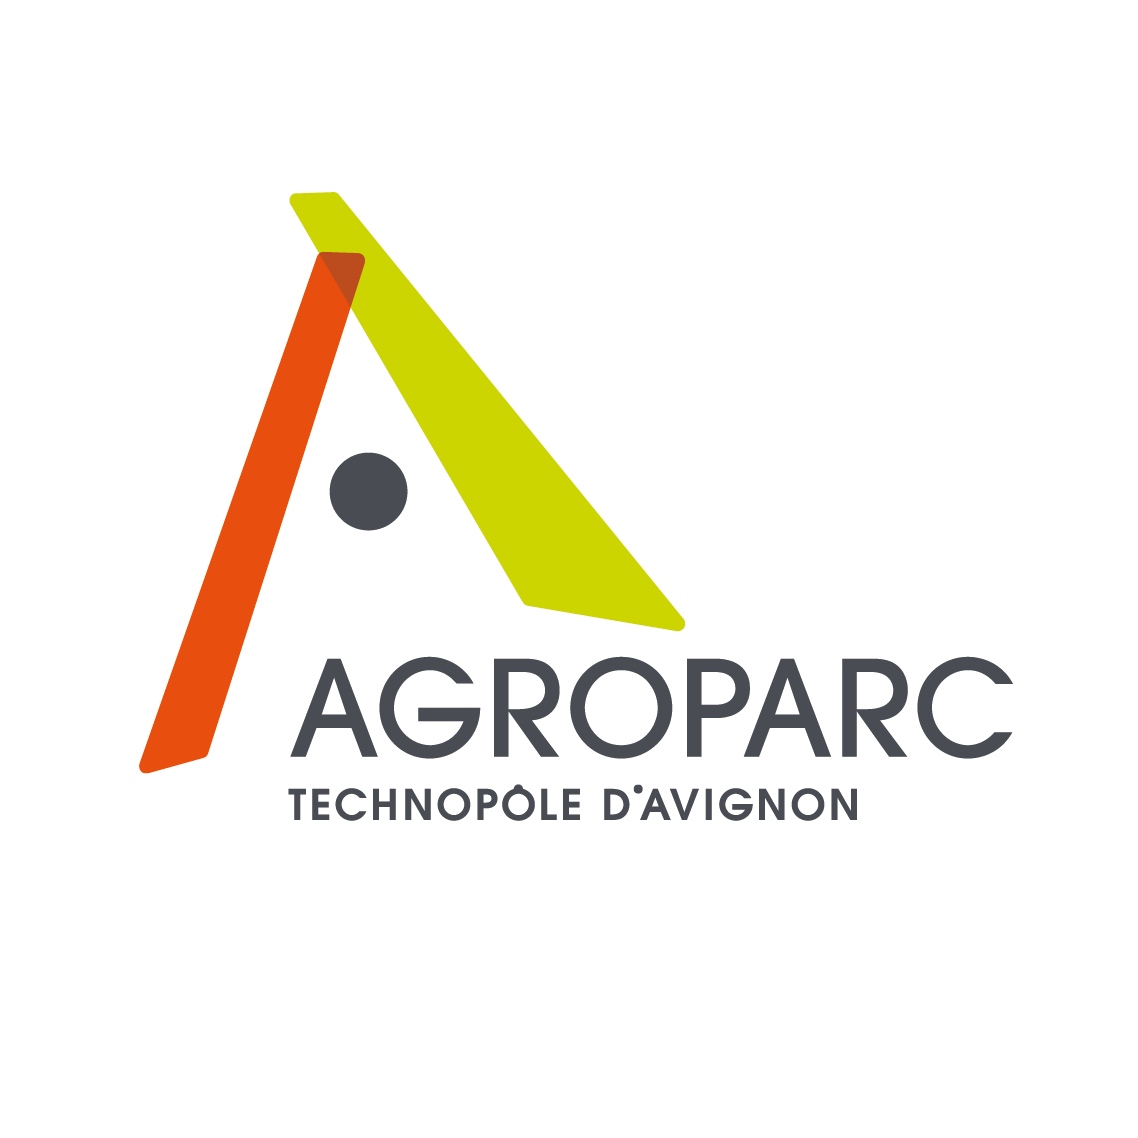 Agroparc